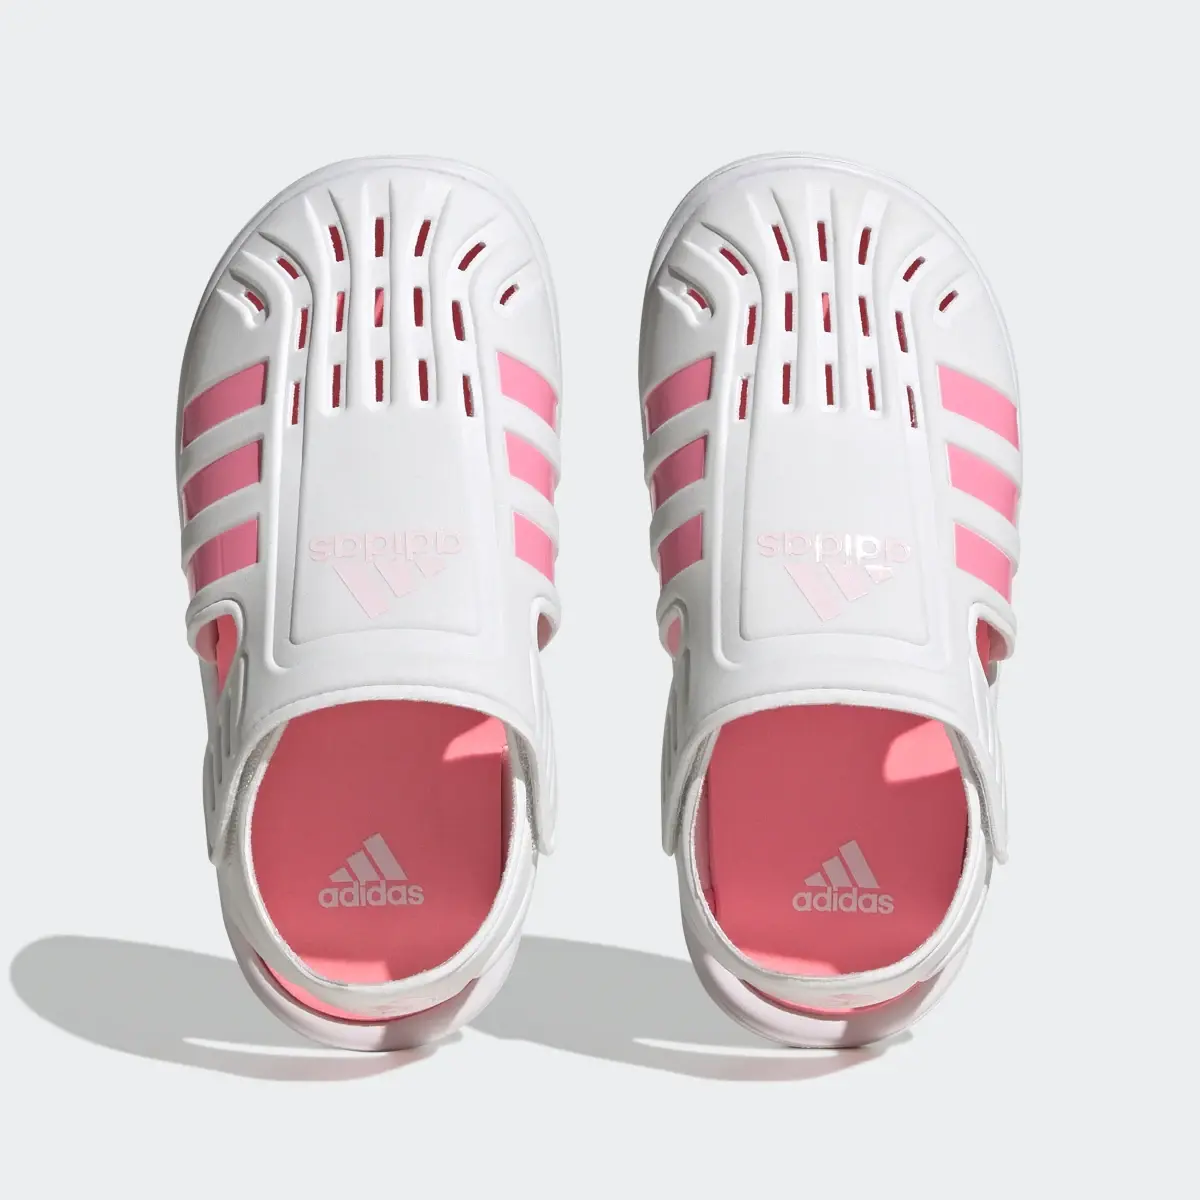 Adidas Summer Closed Toe Water Sandals. 3